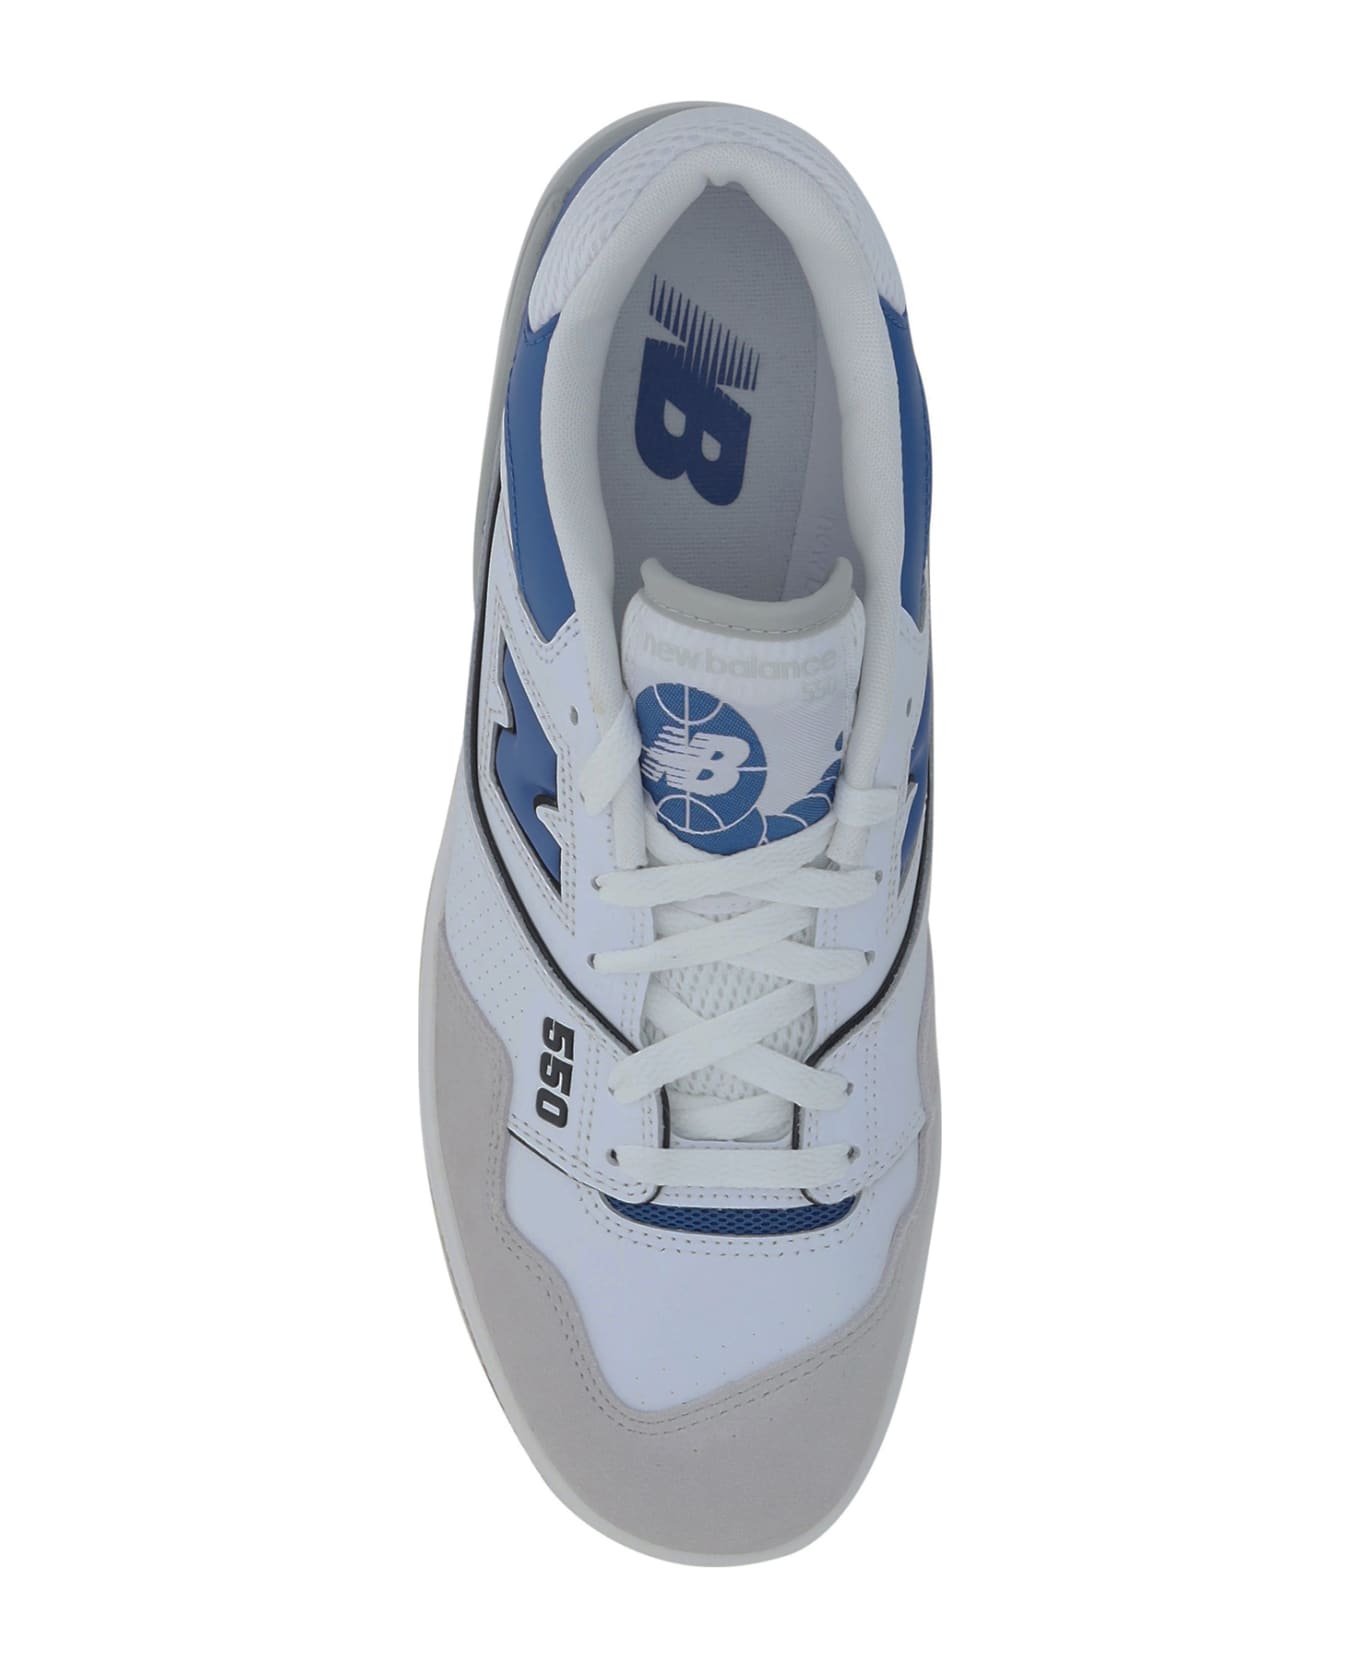 New Balance 550 Sneakers - White/blue スニーカー